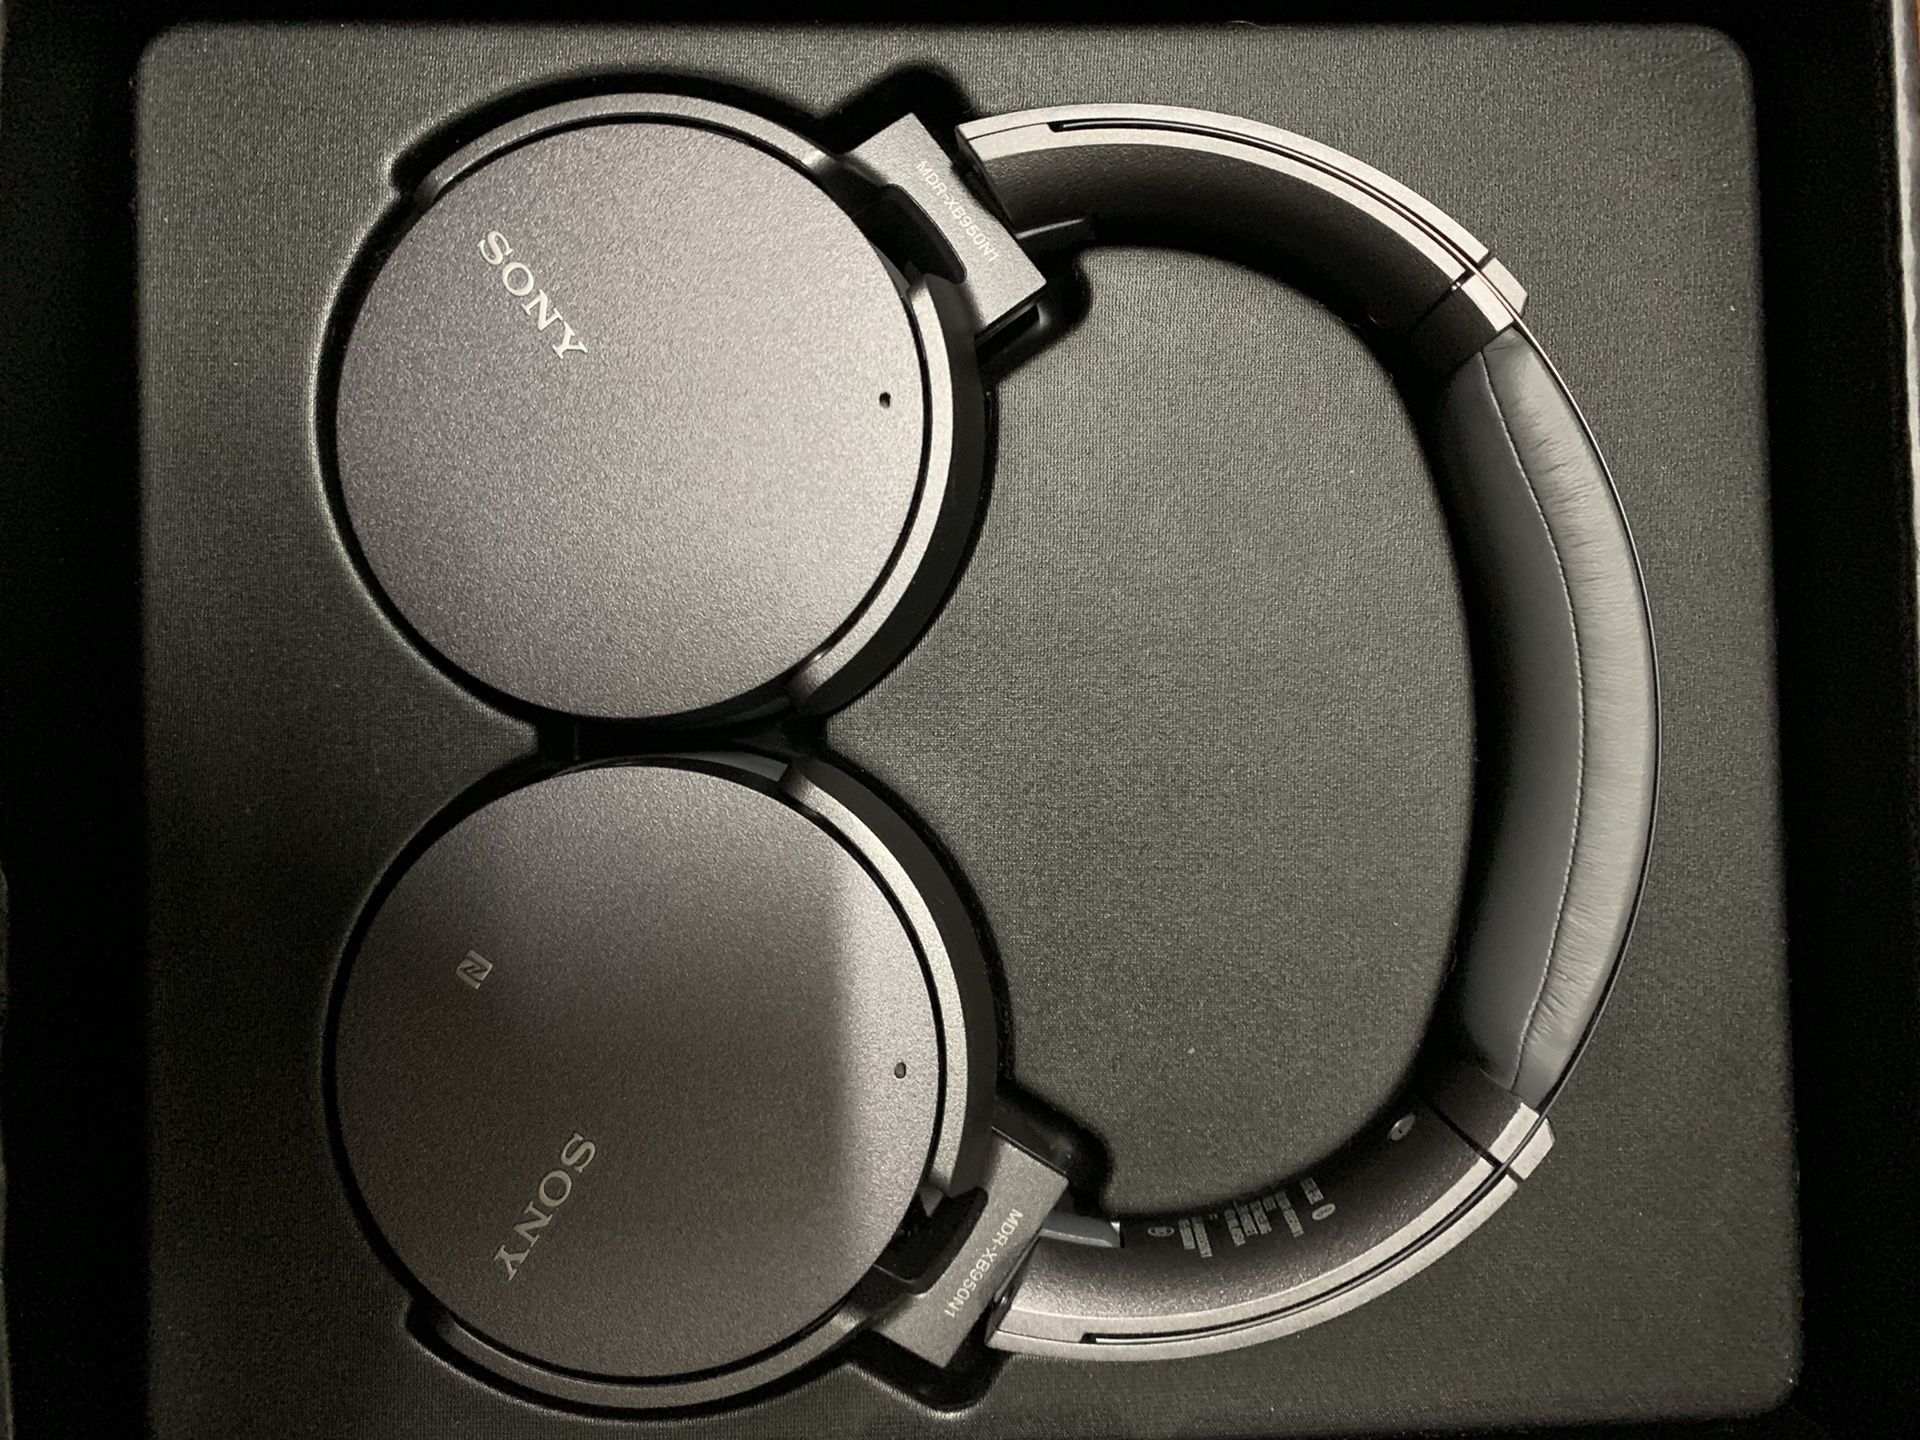 Sony MBR-XB950N1 Extra Bass Noise Canceling wireless headphone